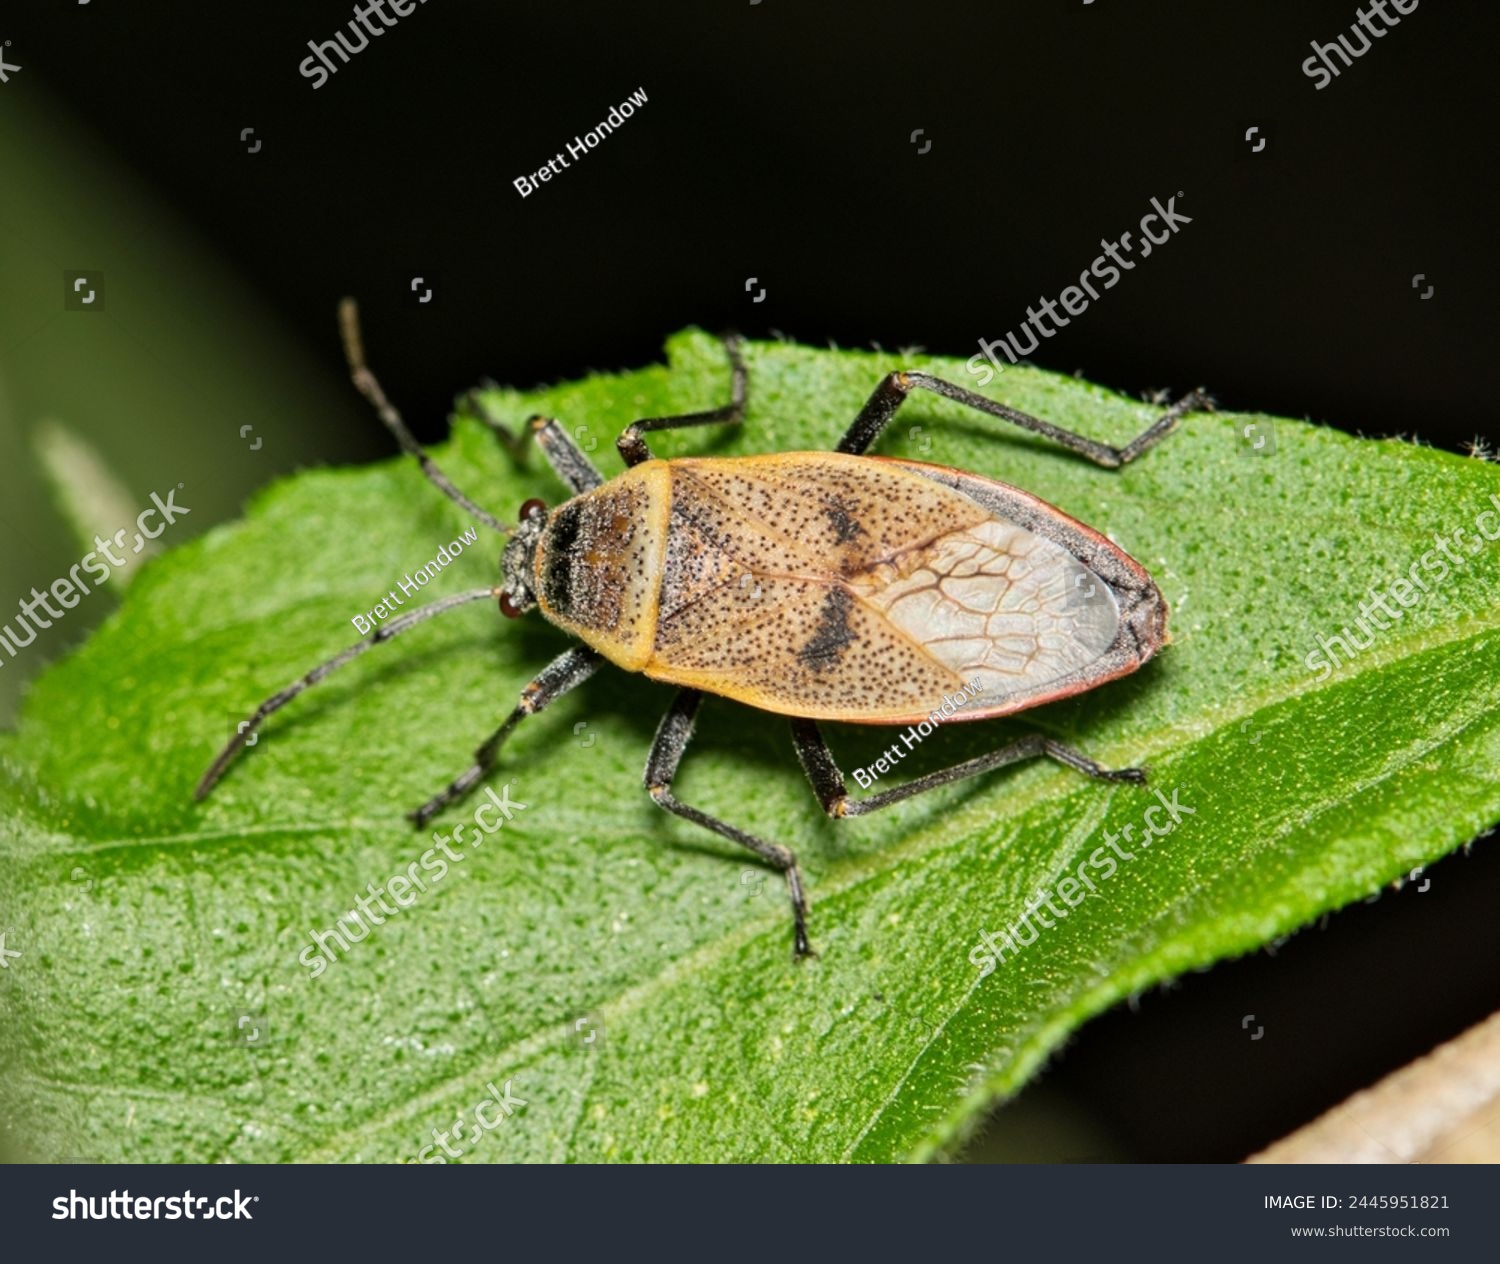 Bordered plant bug (Largus maculatus) insect on leaf night hemiptera, nature Springtime pest control agriculture. #2445951821